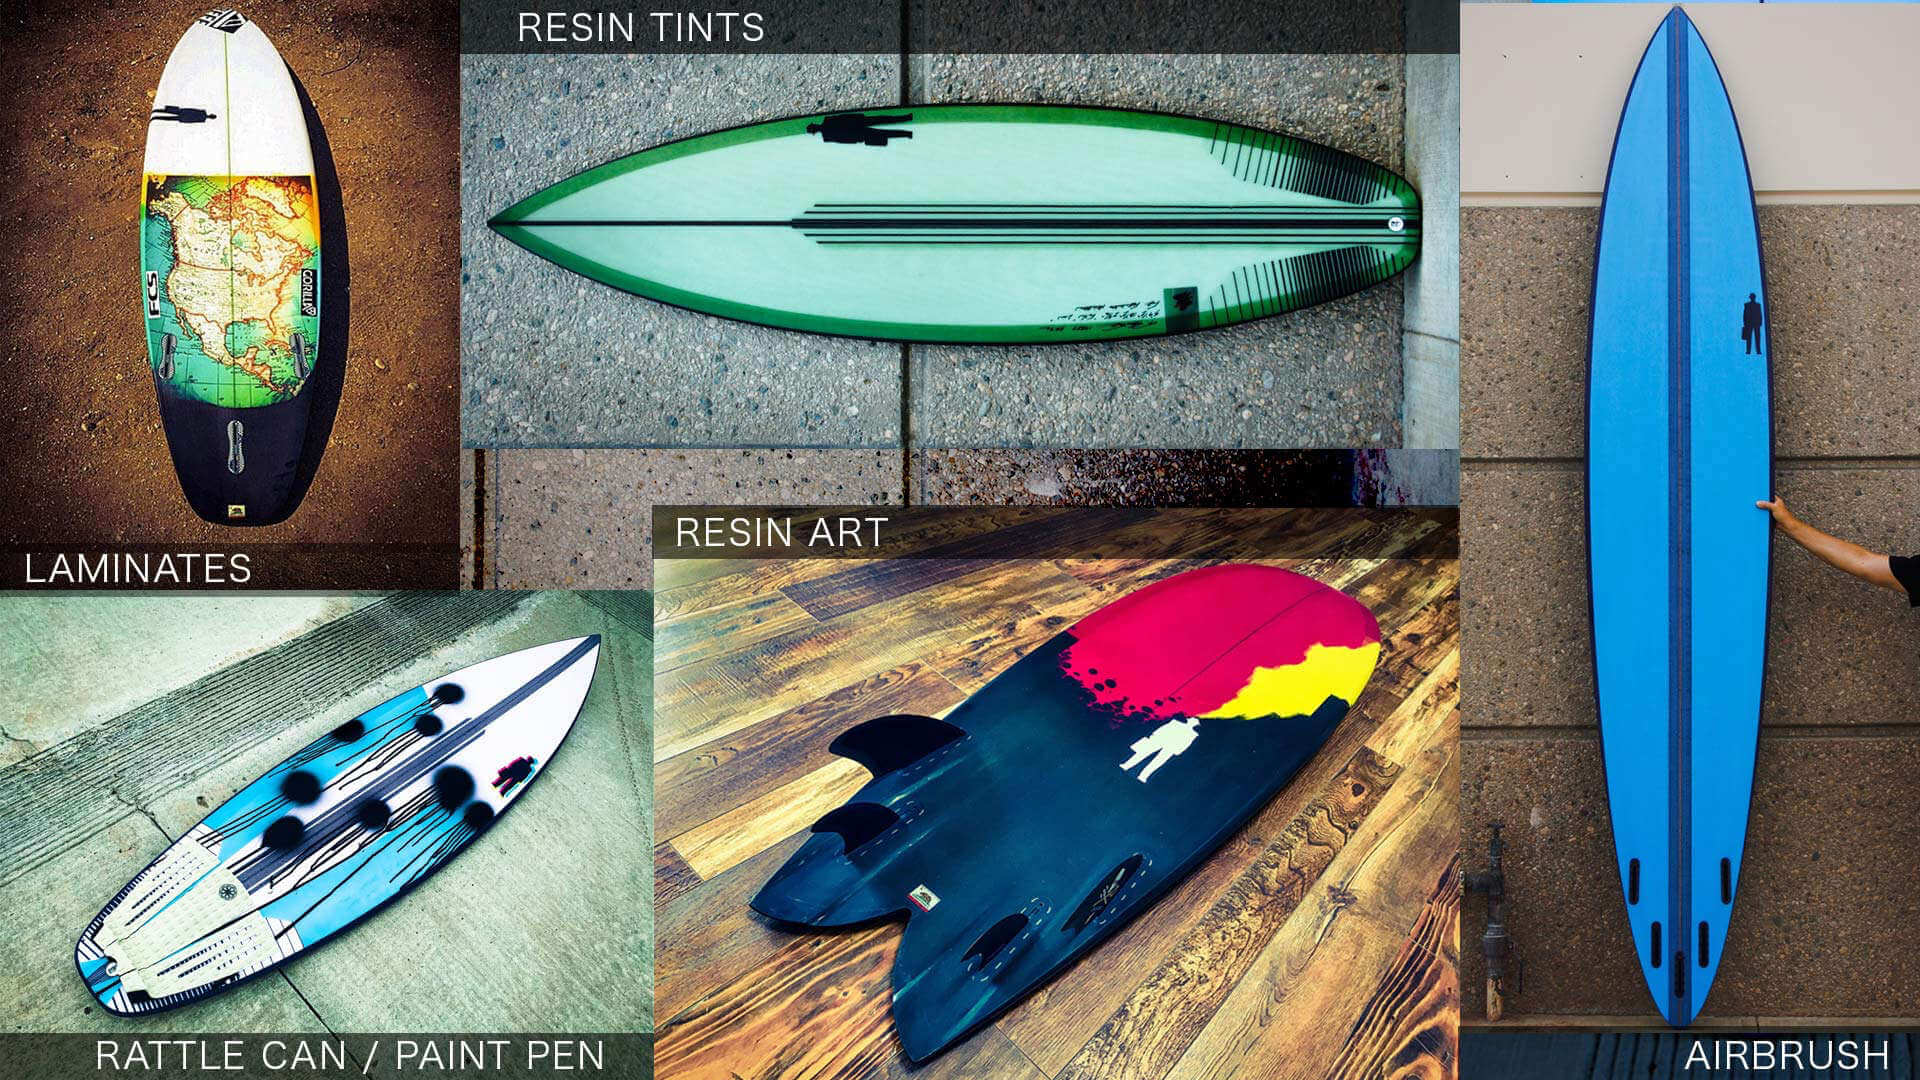 surfboard artwork galleries including airbrush, resin tint, resin art, laminates, branded surfboards